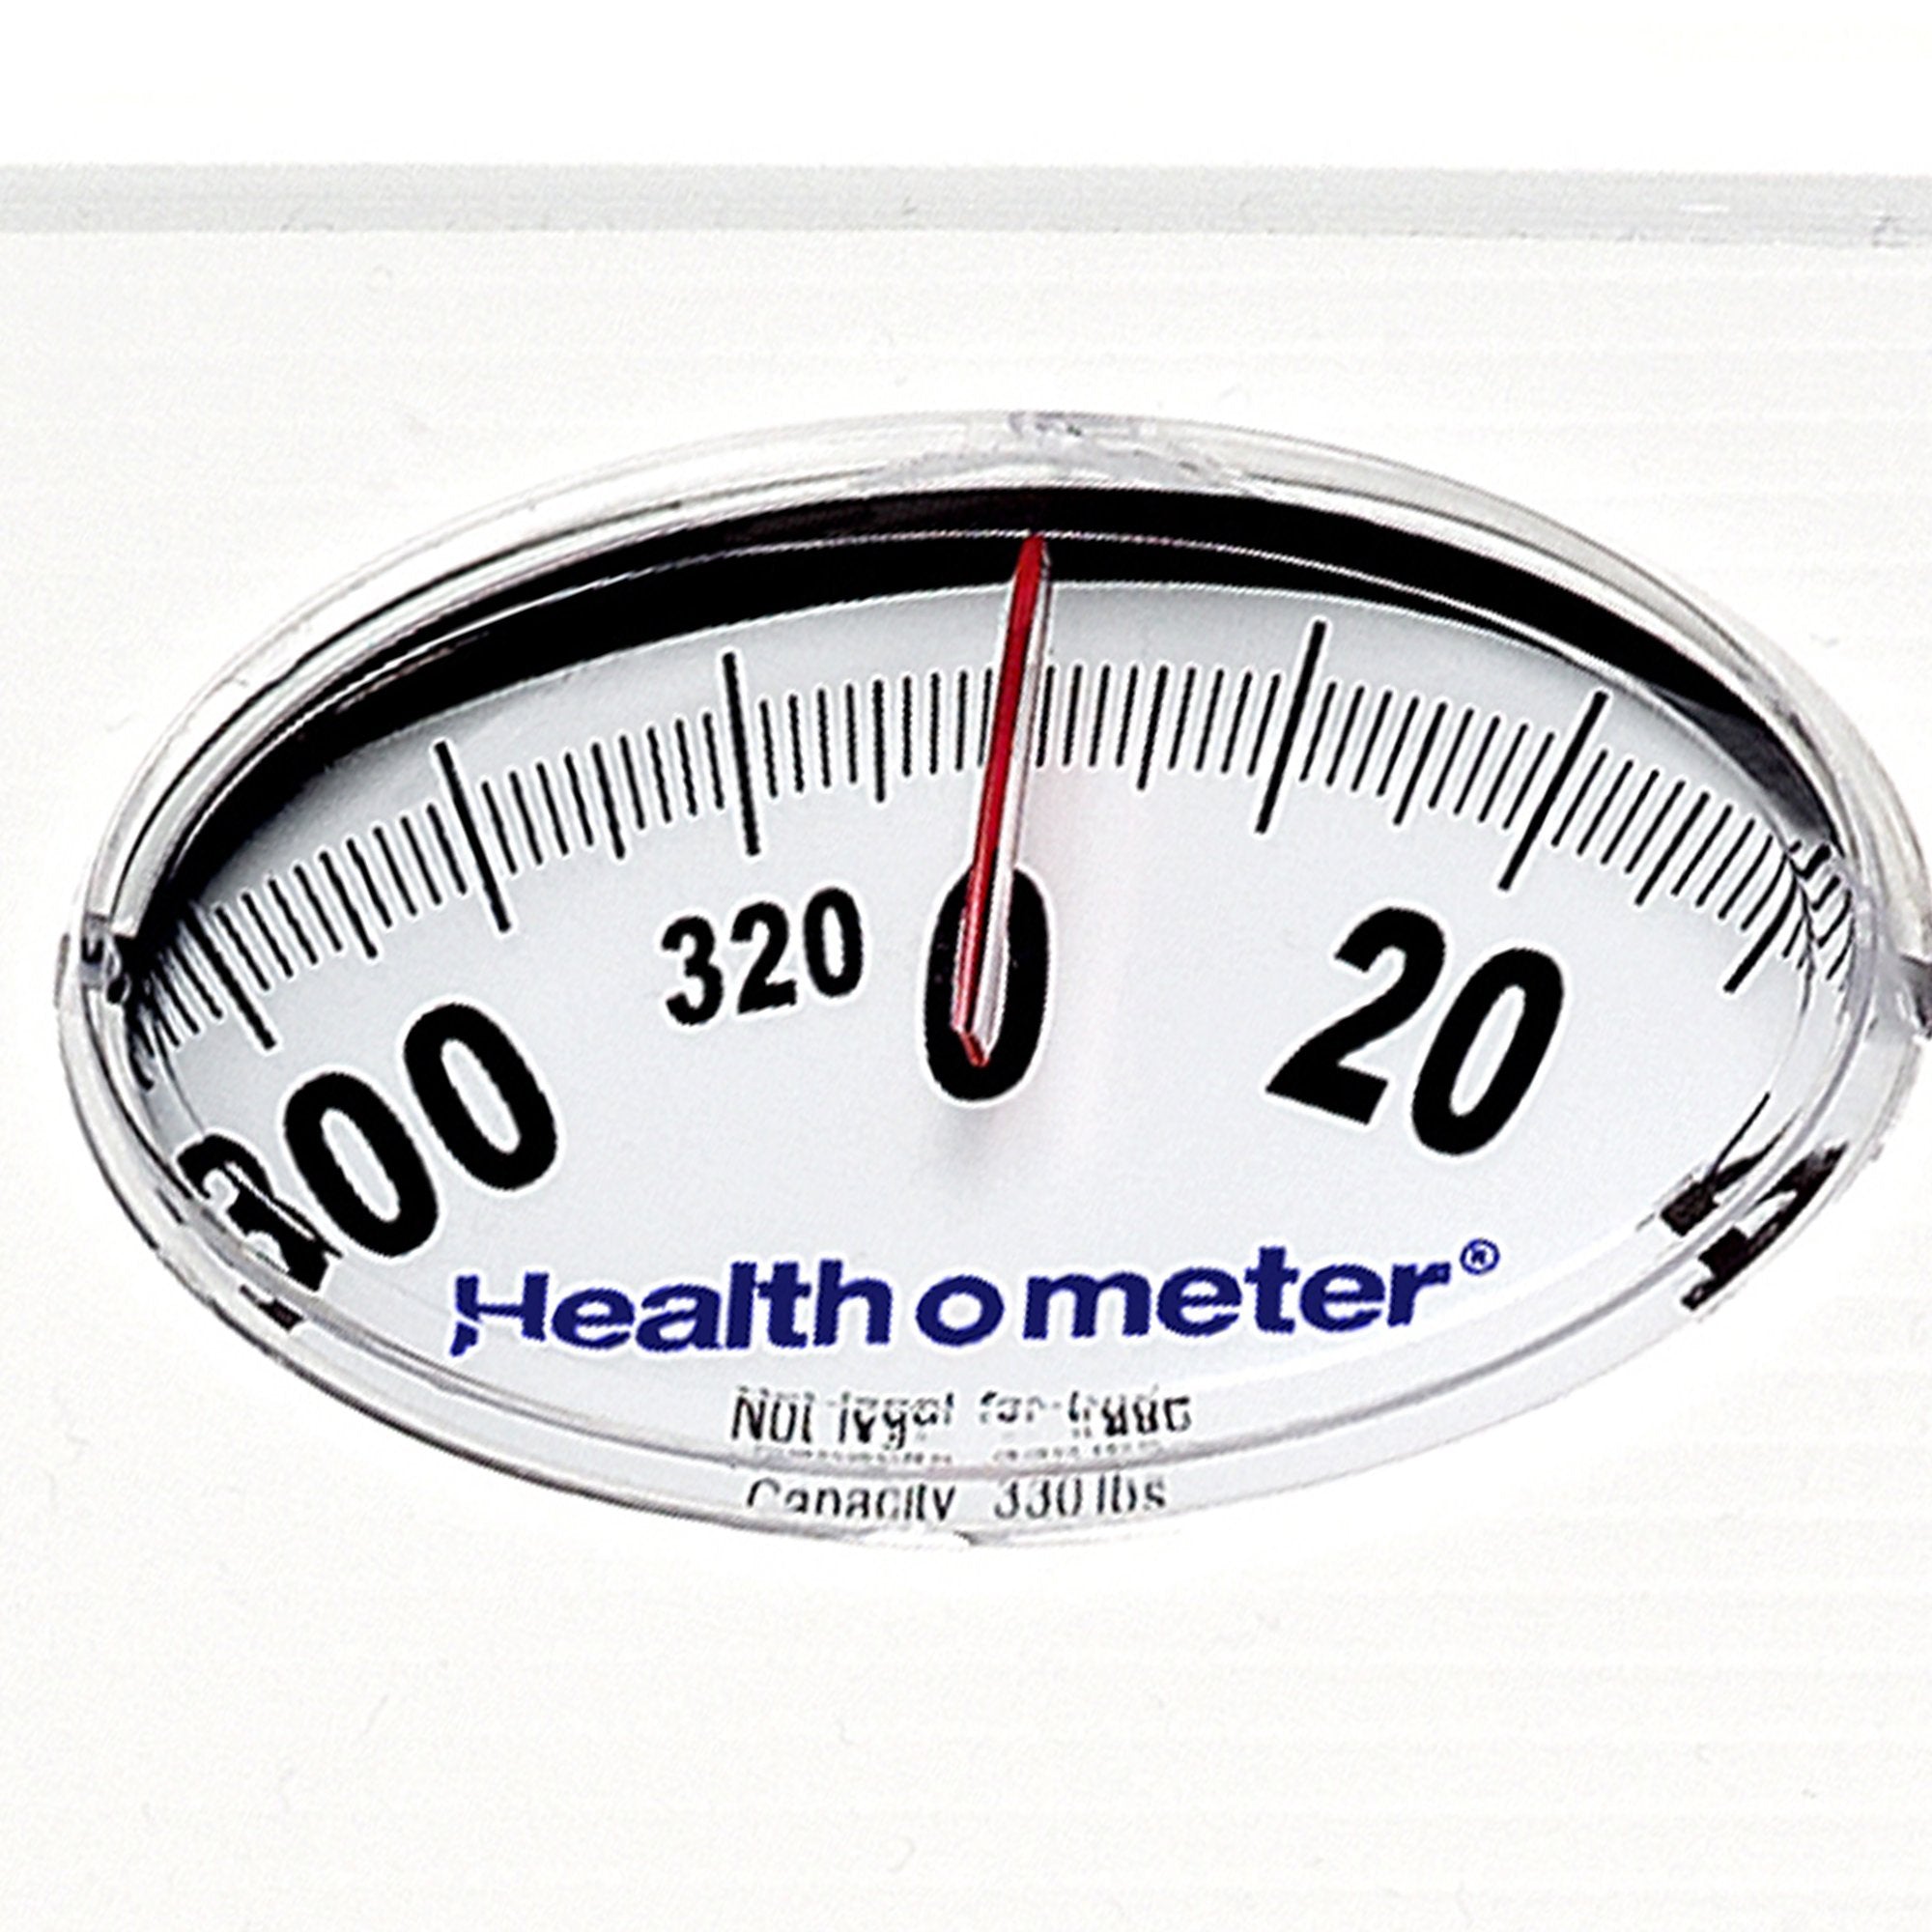 Floor Scale Health O Meter Dial Display 330 lbs. Capacity White Analog